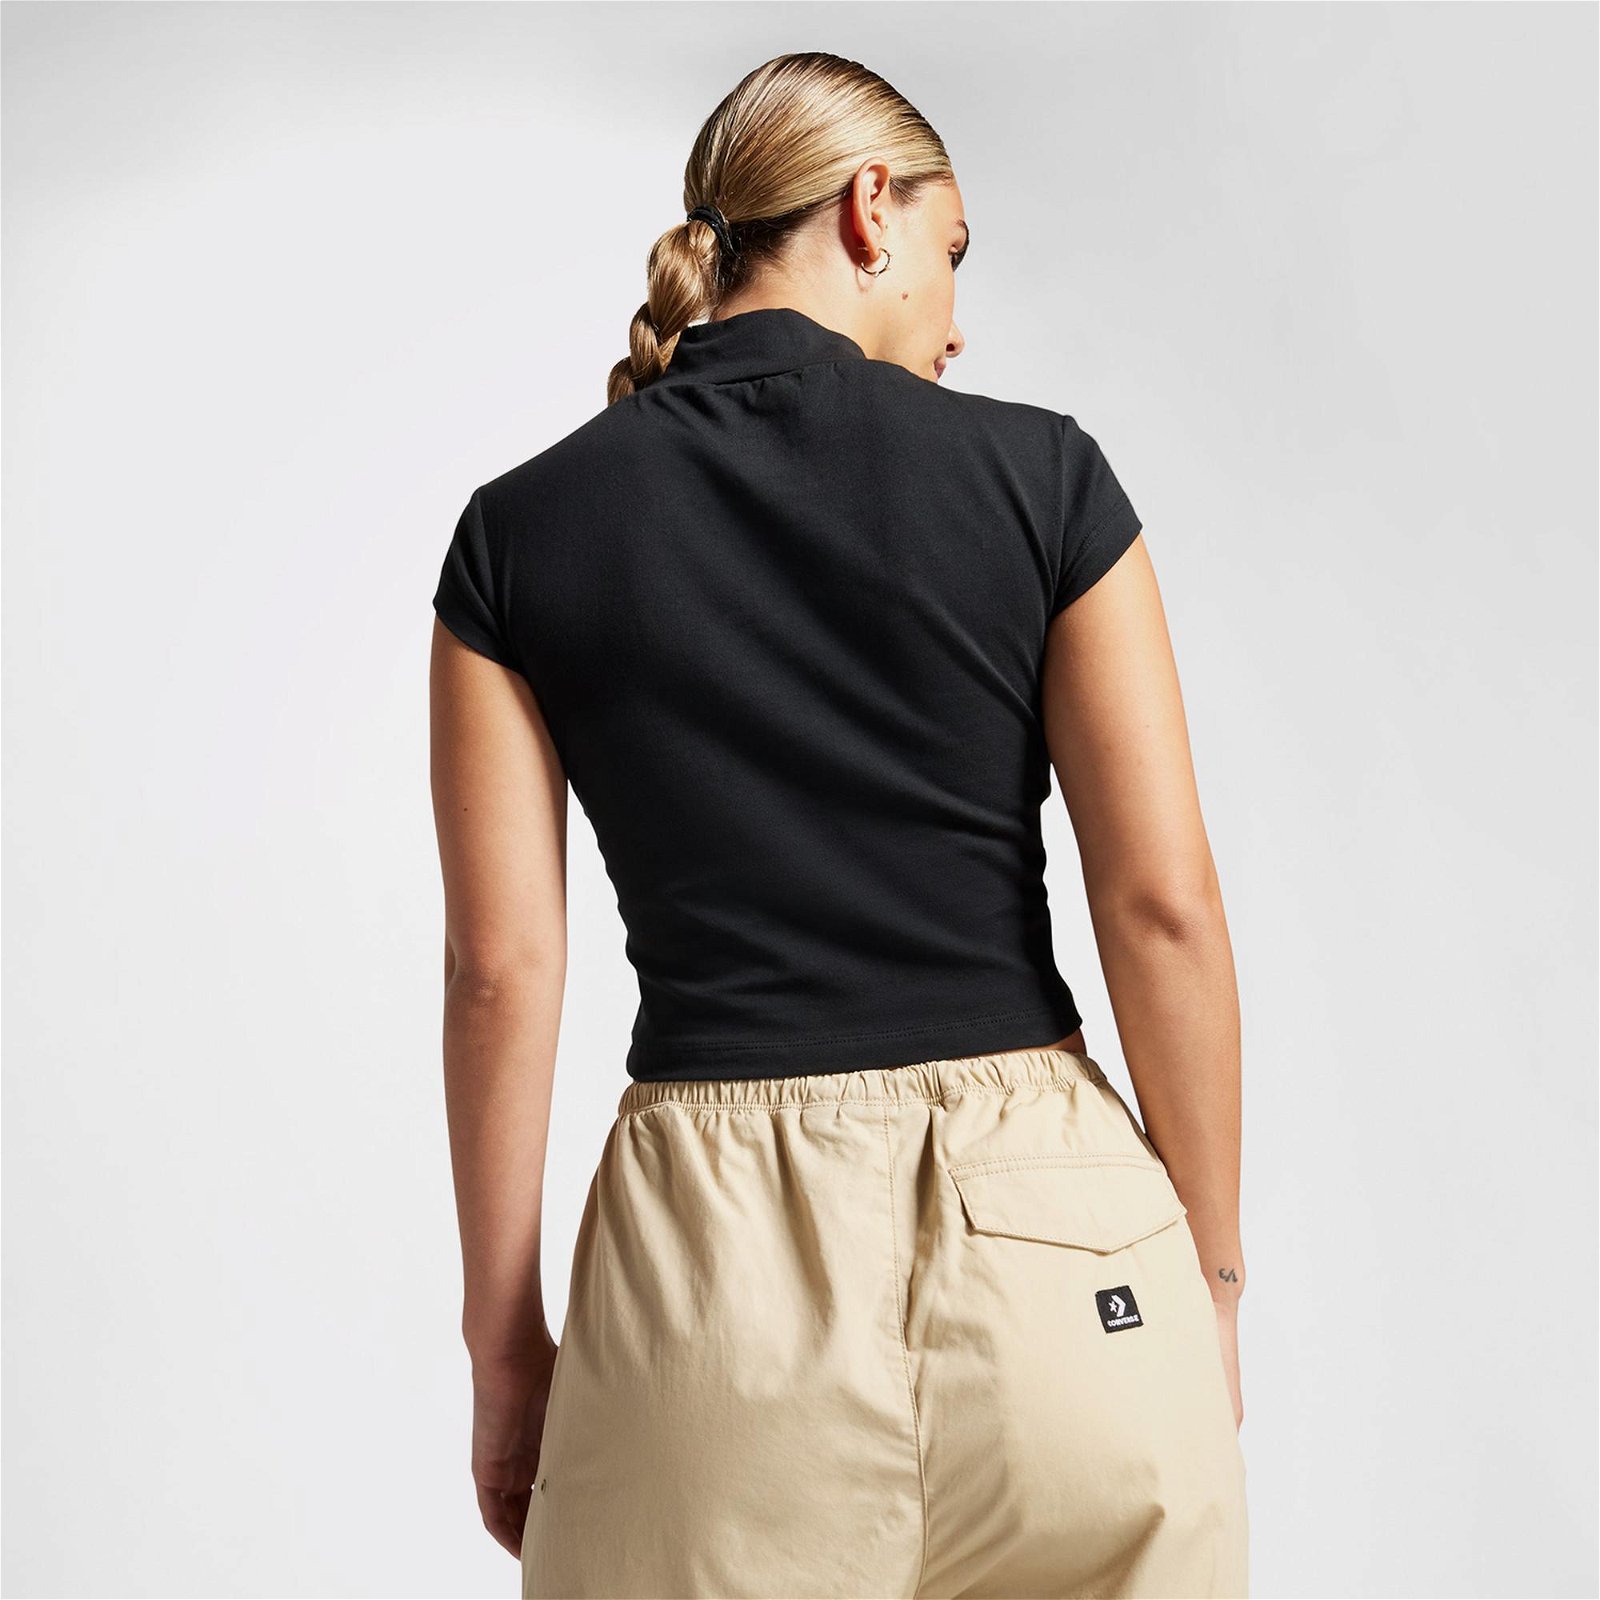 Converse Wordmark Short Sleeve Top Kadın Siyah T-Shirt